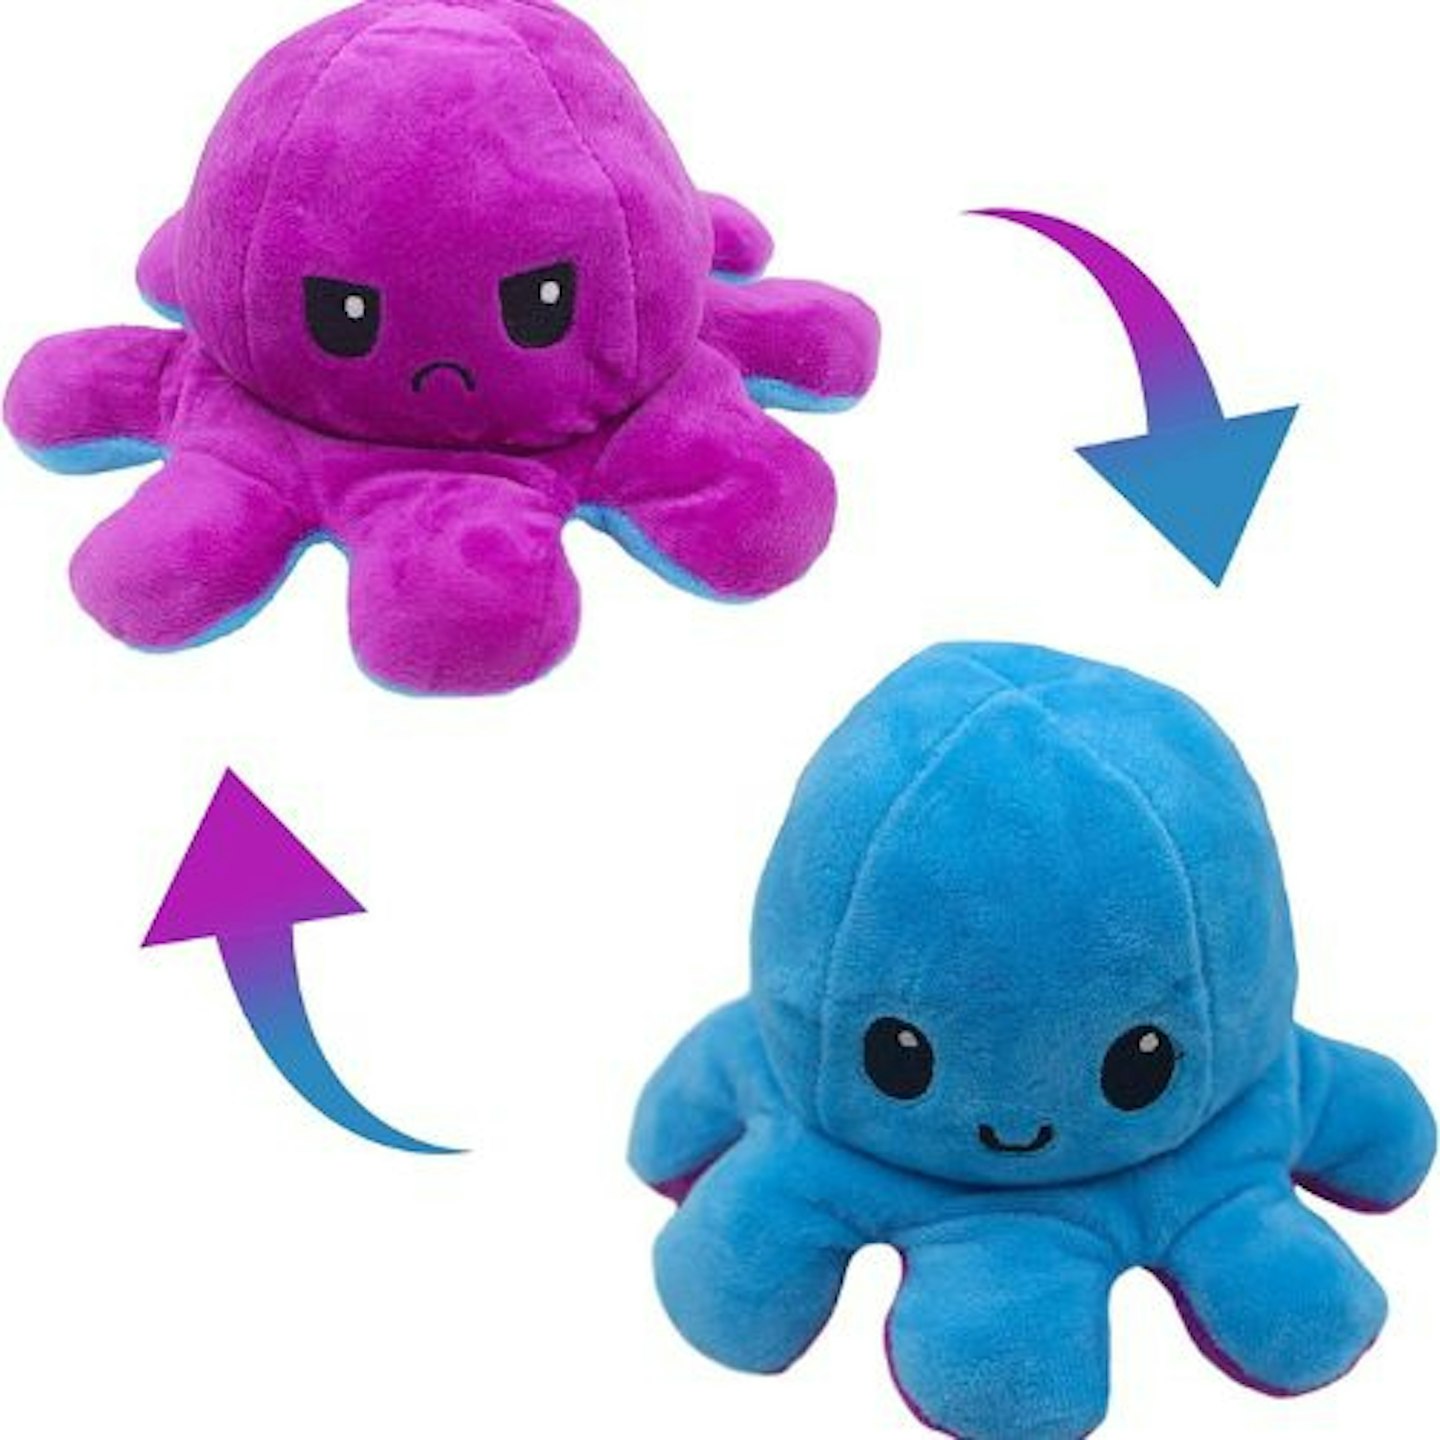 octopus-soft-toy-fidget